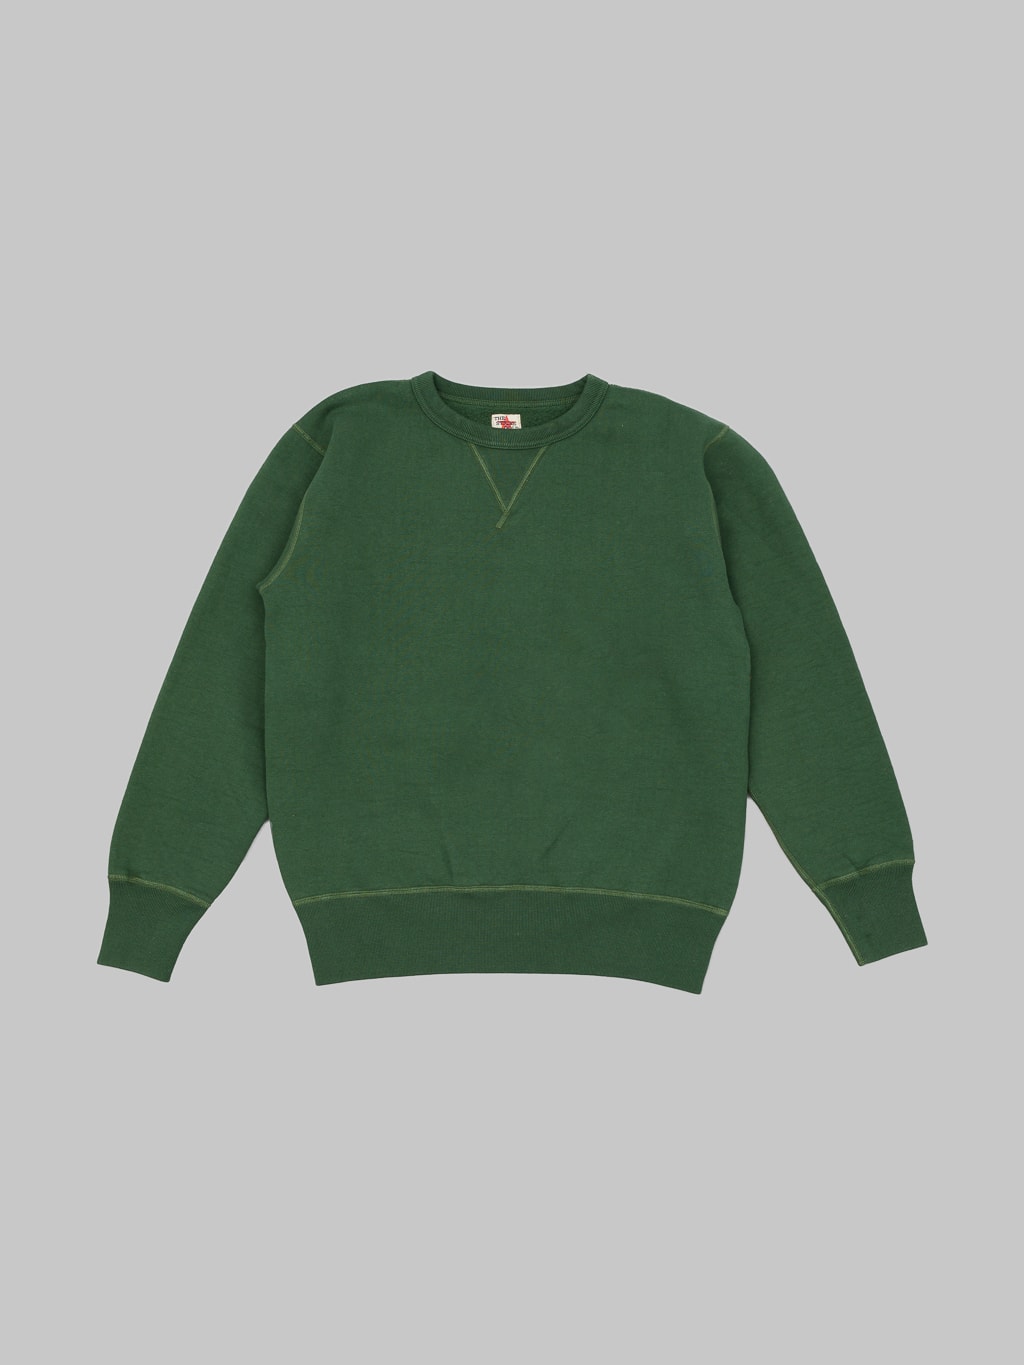 The Strike Gold Loopwheeled Sweatshirt Green front